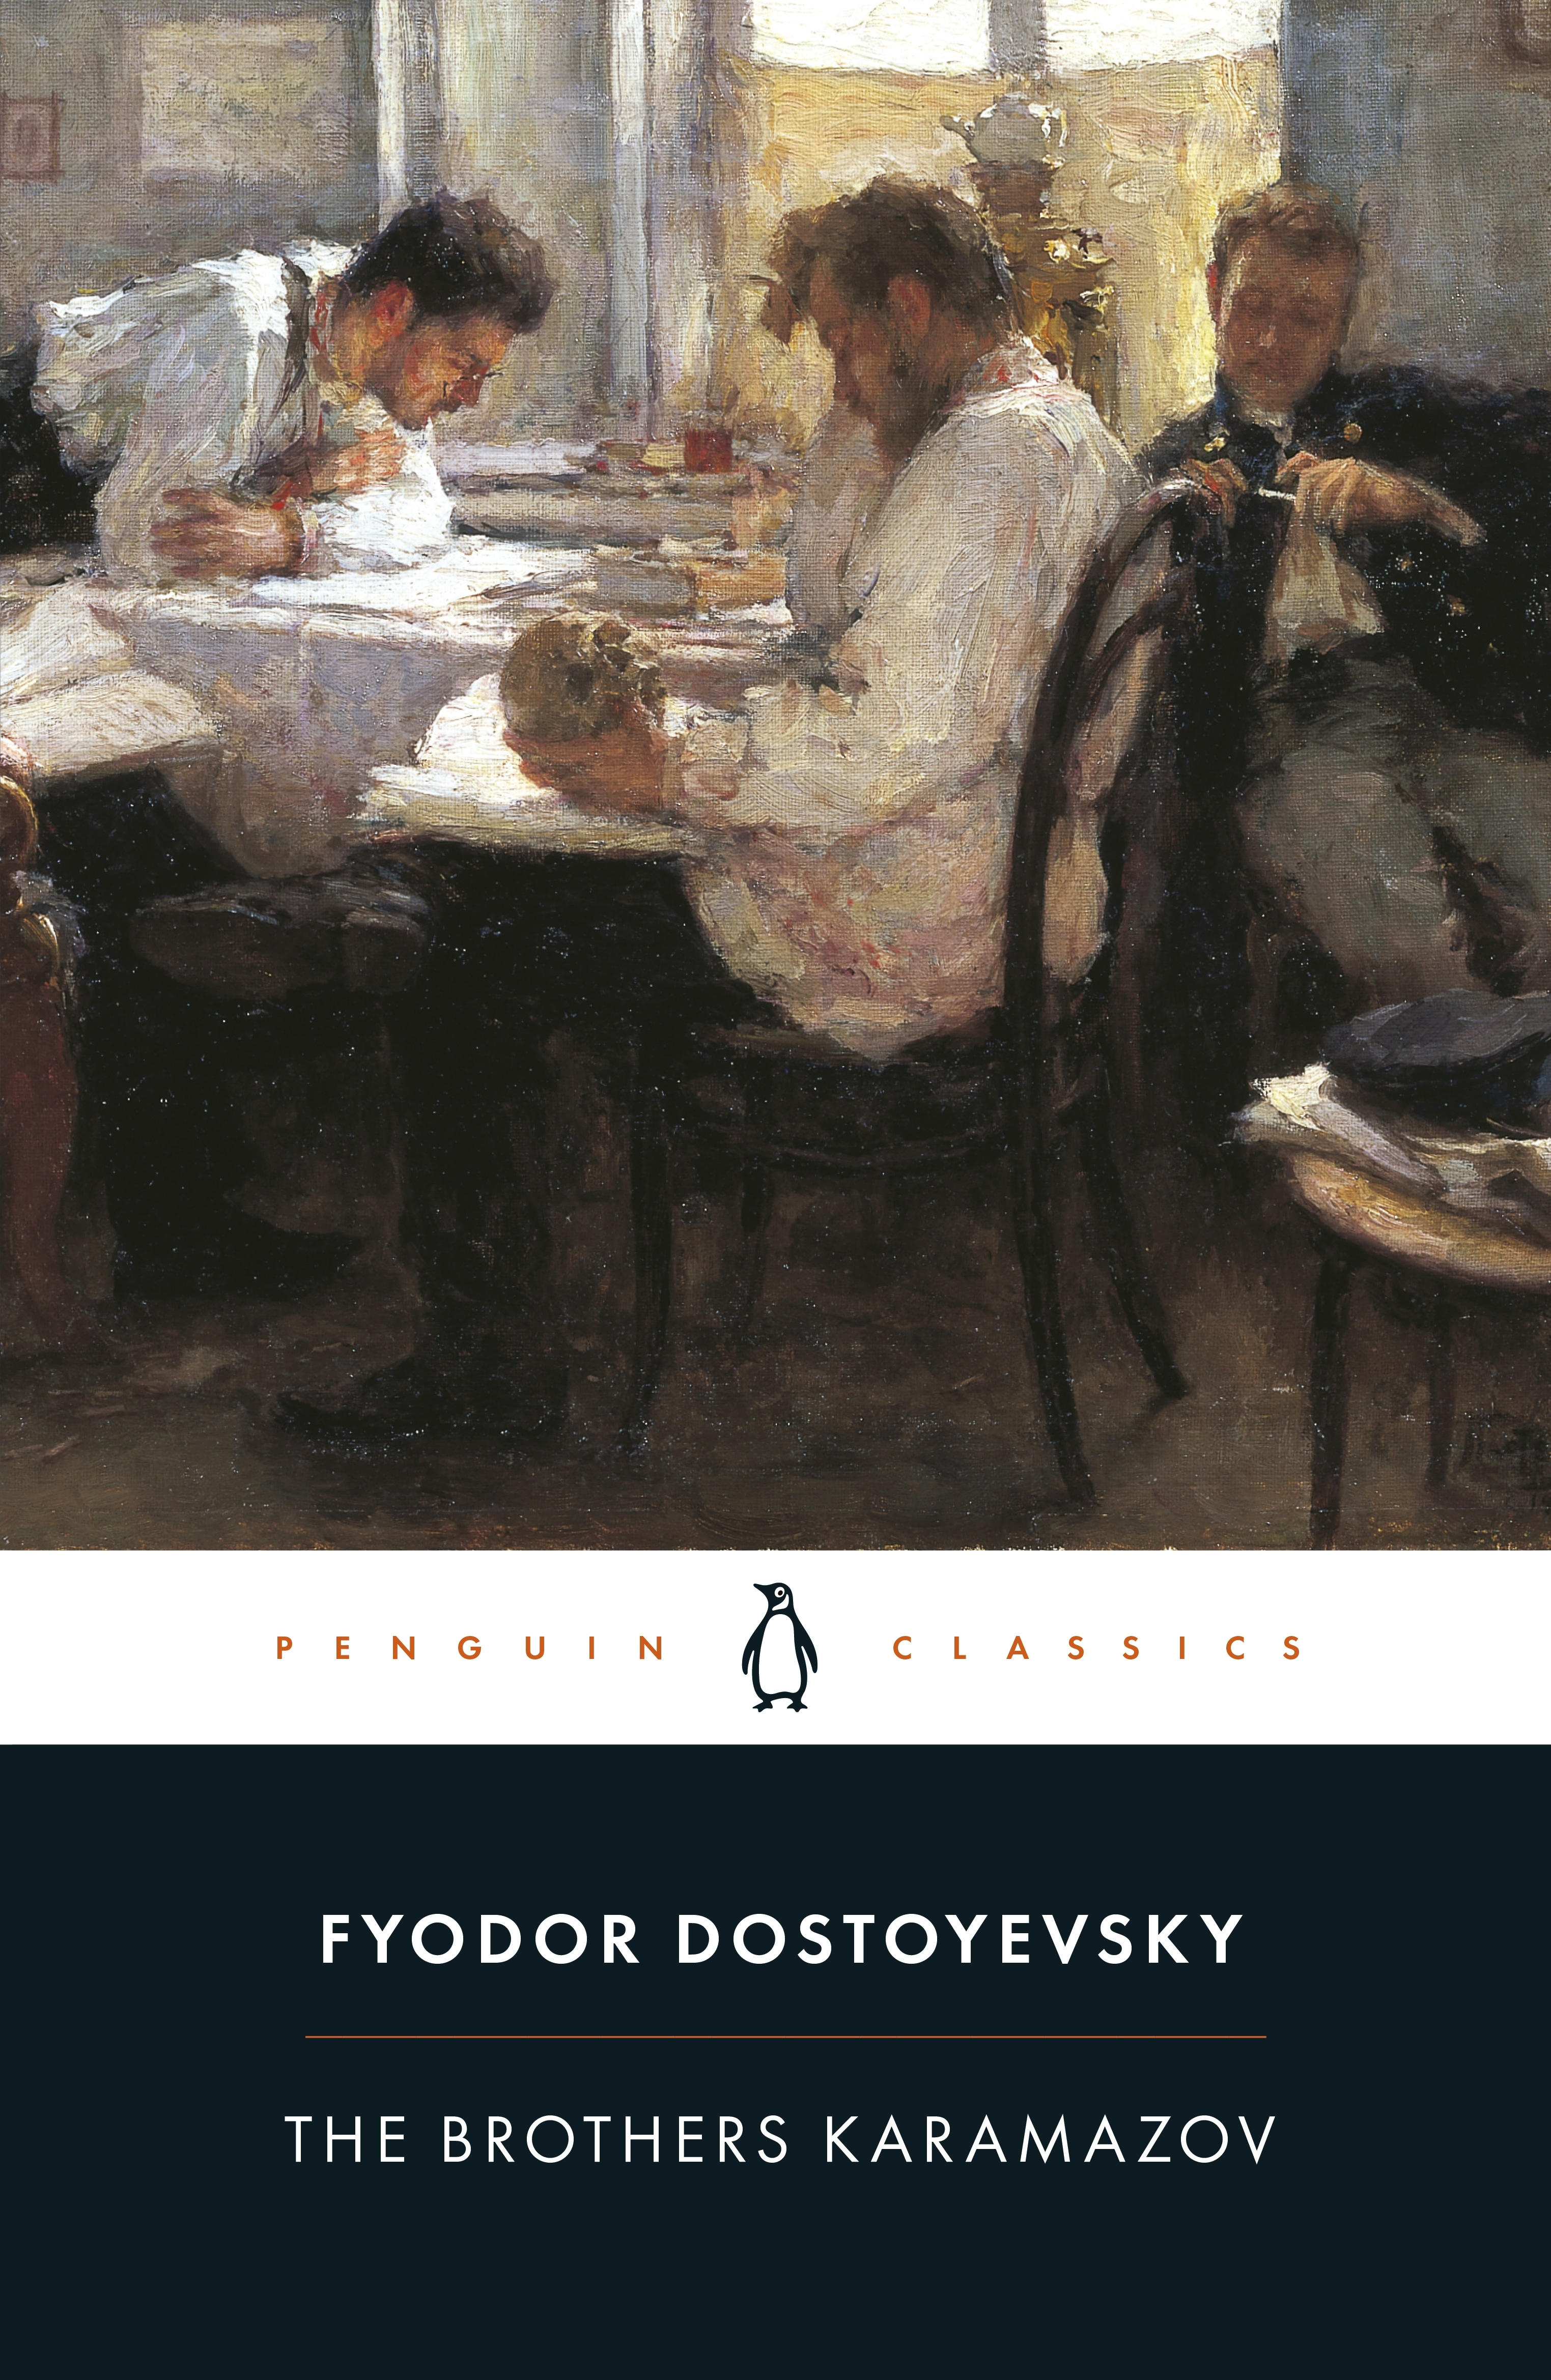 Book “The Brothers Karamazov” by Fyodor Dostoyevsky, David McDuff — February 27, 2003